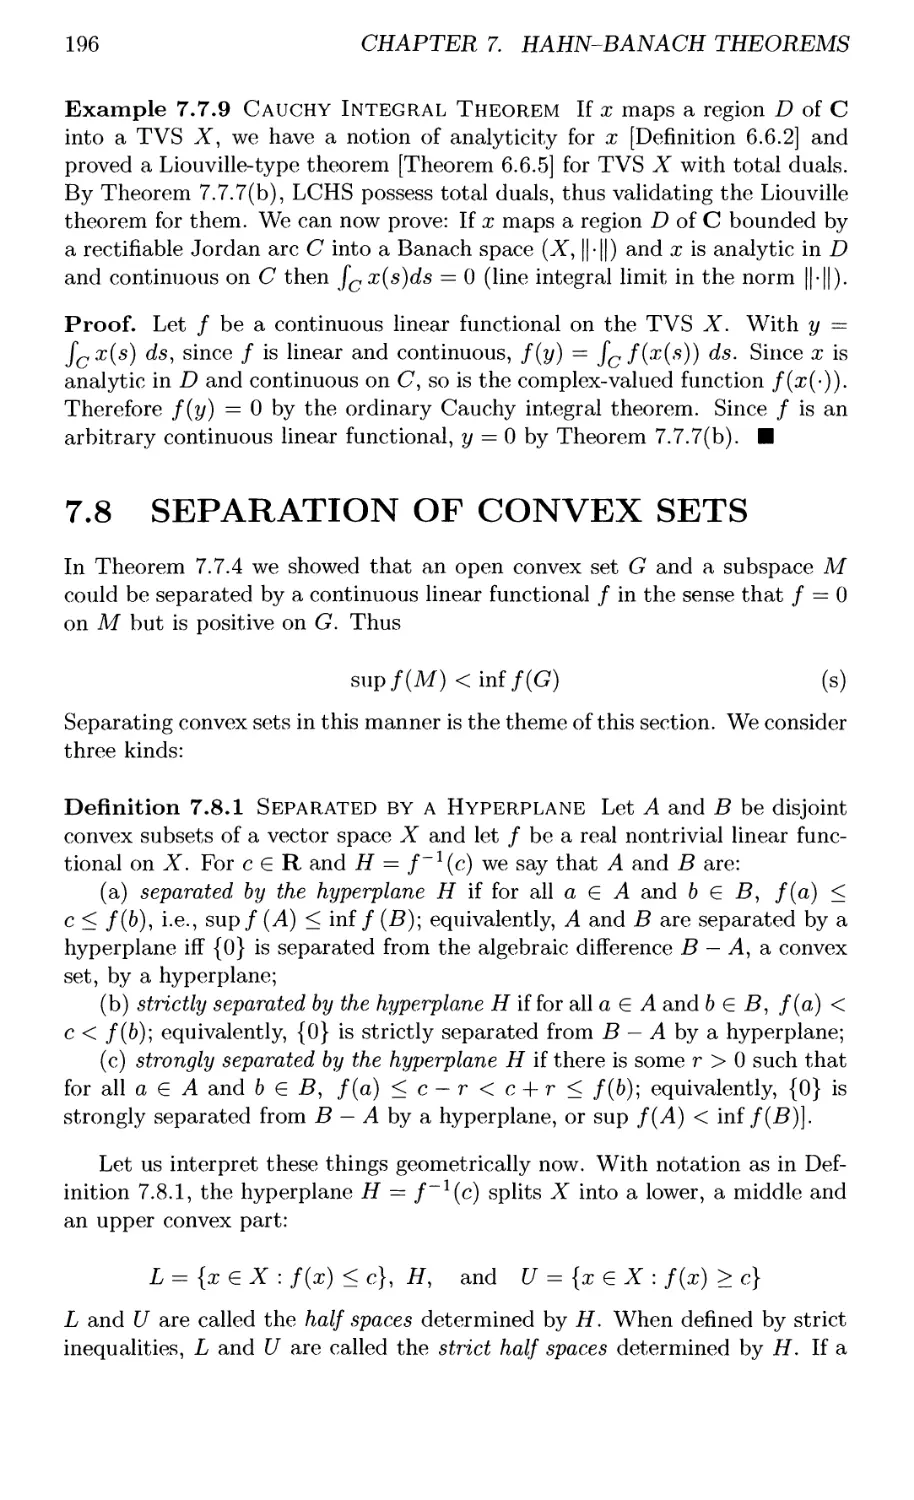 7.8 SEPARATION OF CONVEX SETS